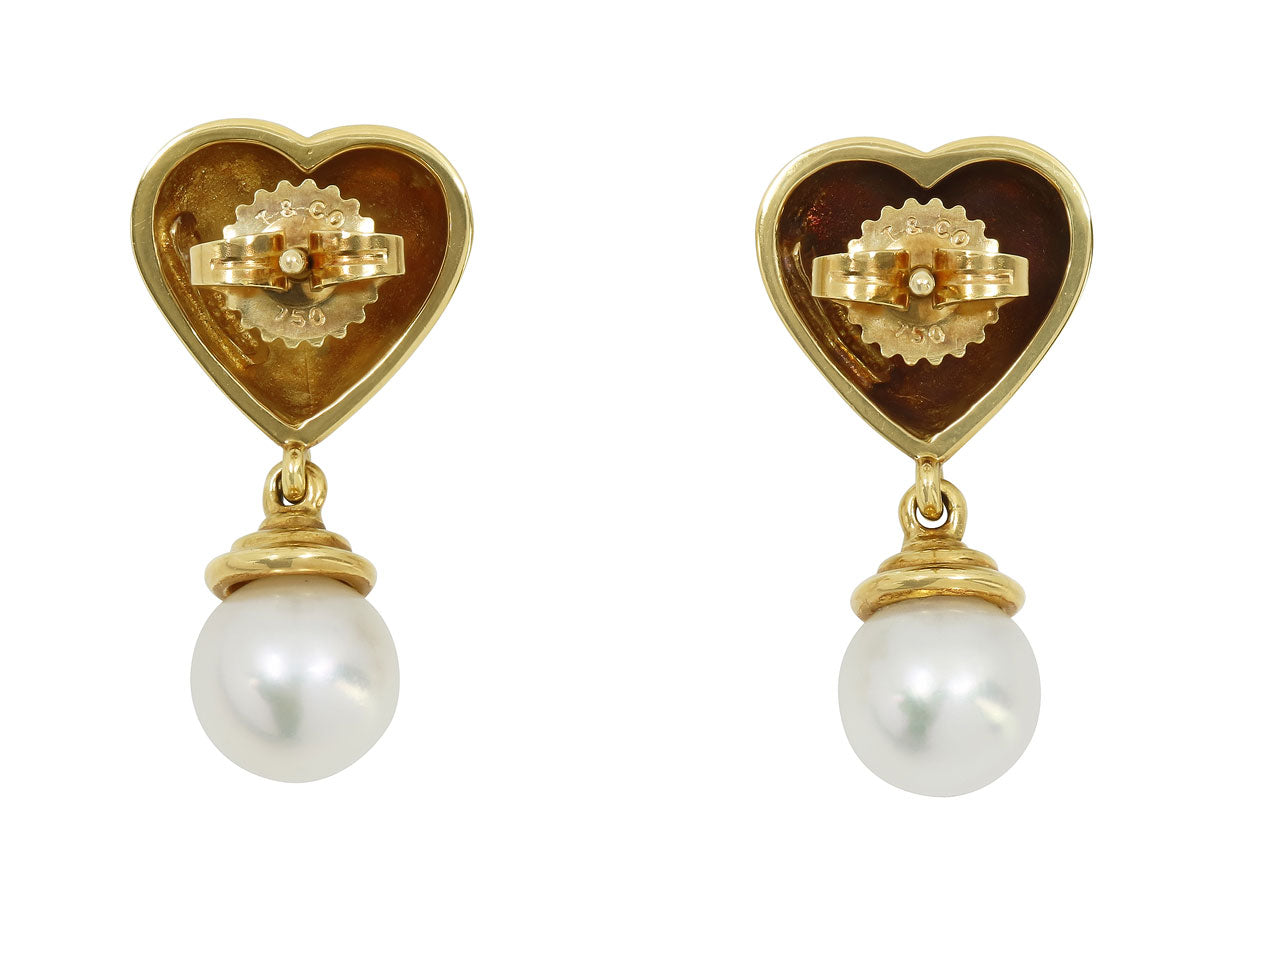 Tiffany & Co. Pearl and Heart Earrings in 18K Gold